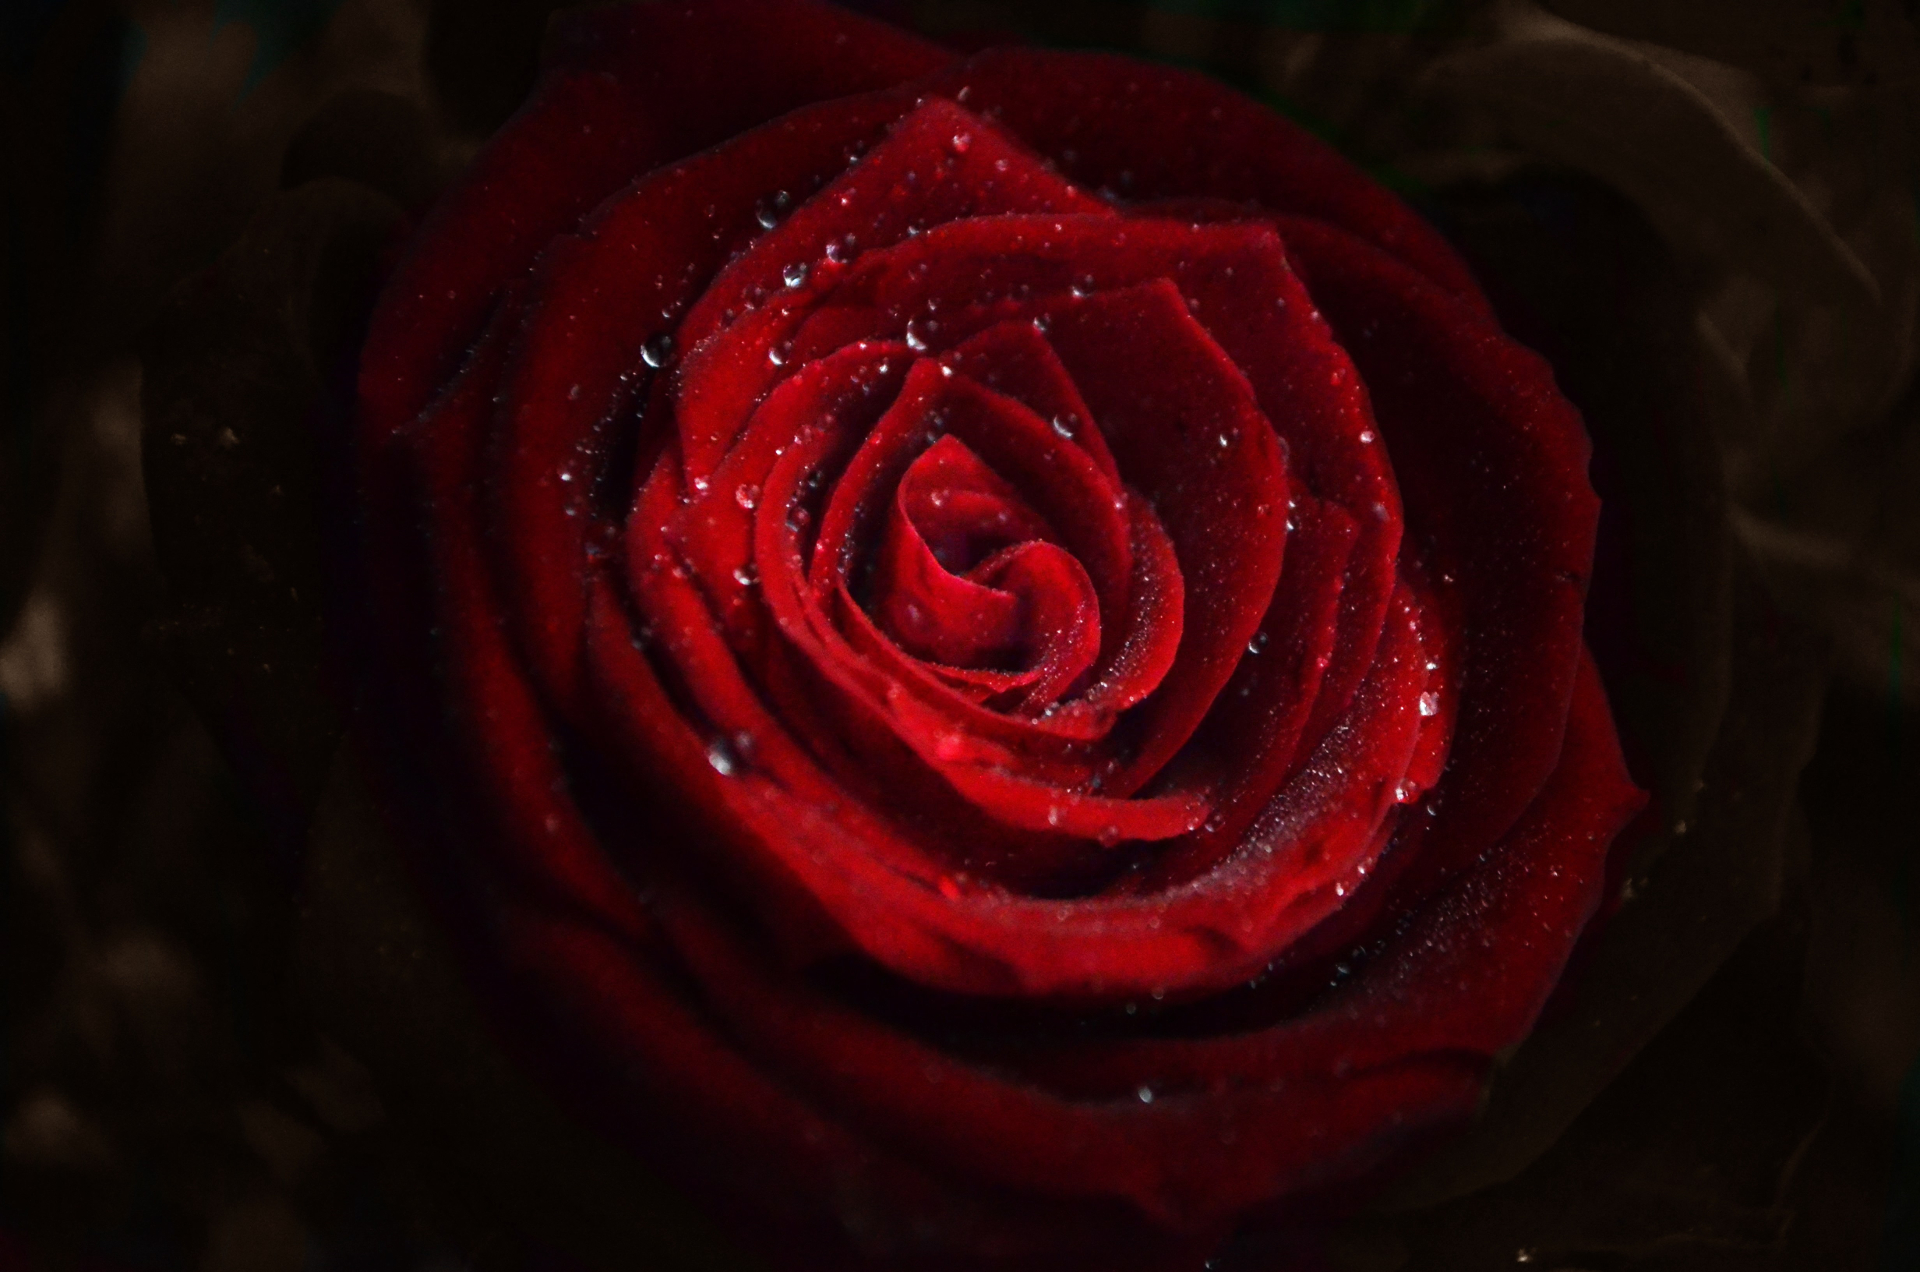 Descarga gratuita de fondo de pantalla para móvil de Flores, Rosa, Flor, Rosa Roja, Flor Roja, Tierra/naturaleza.